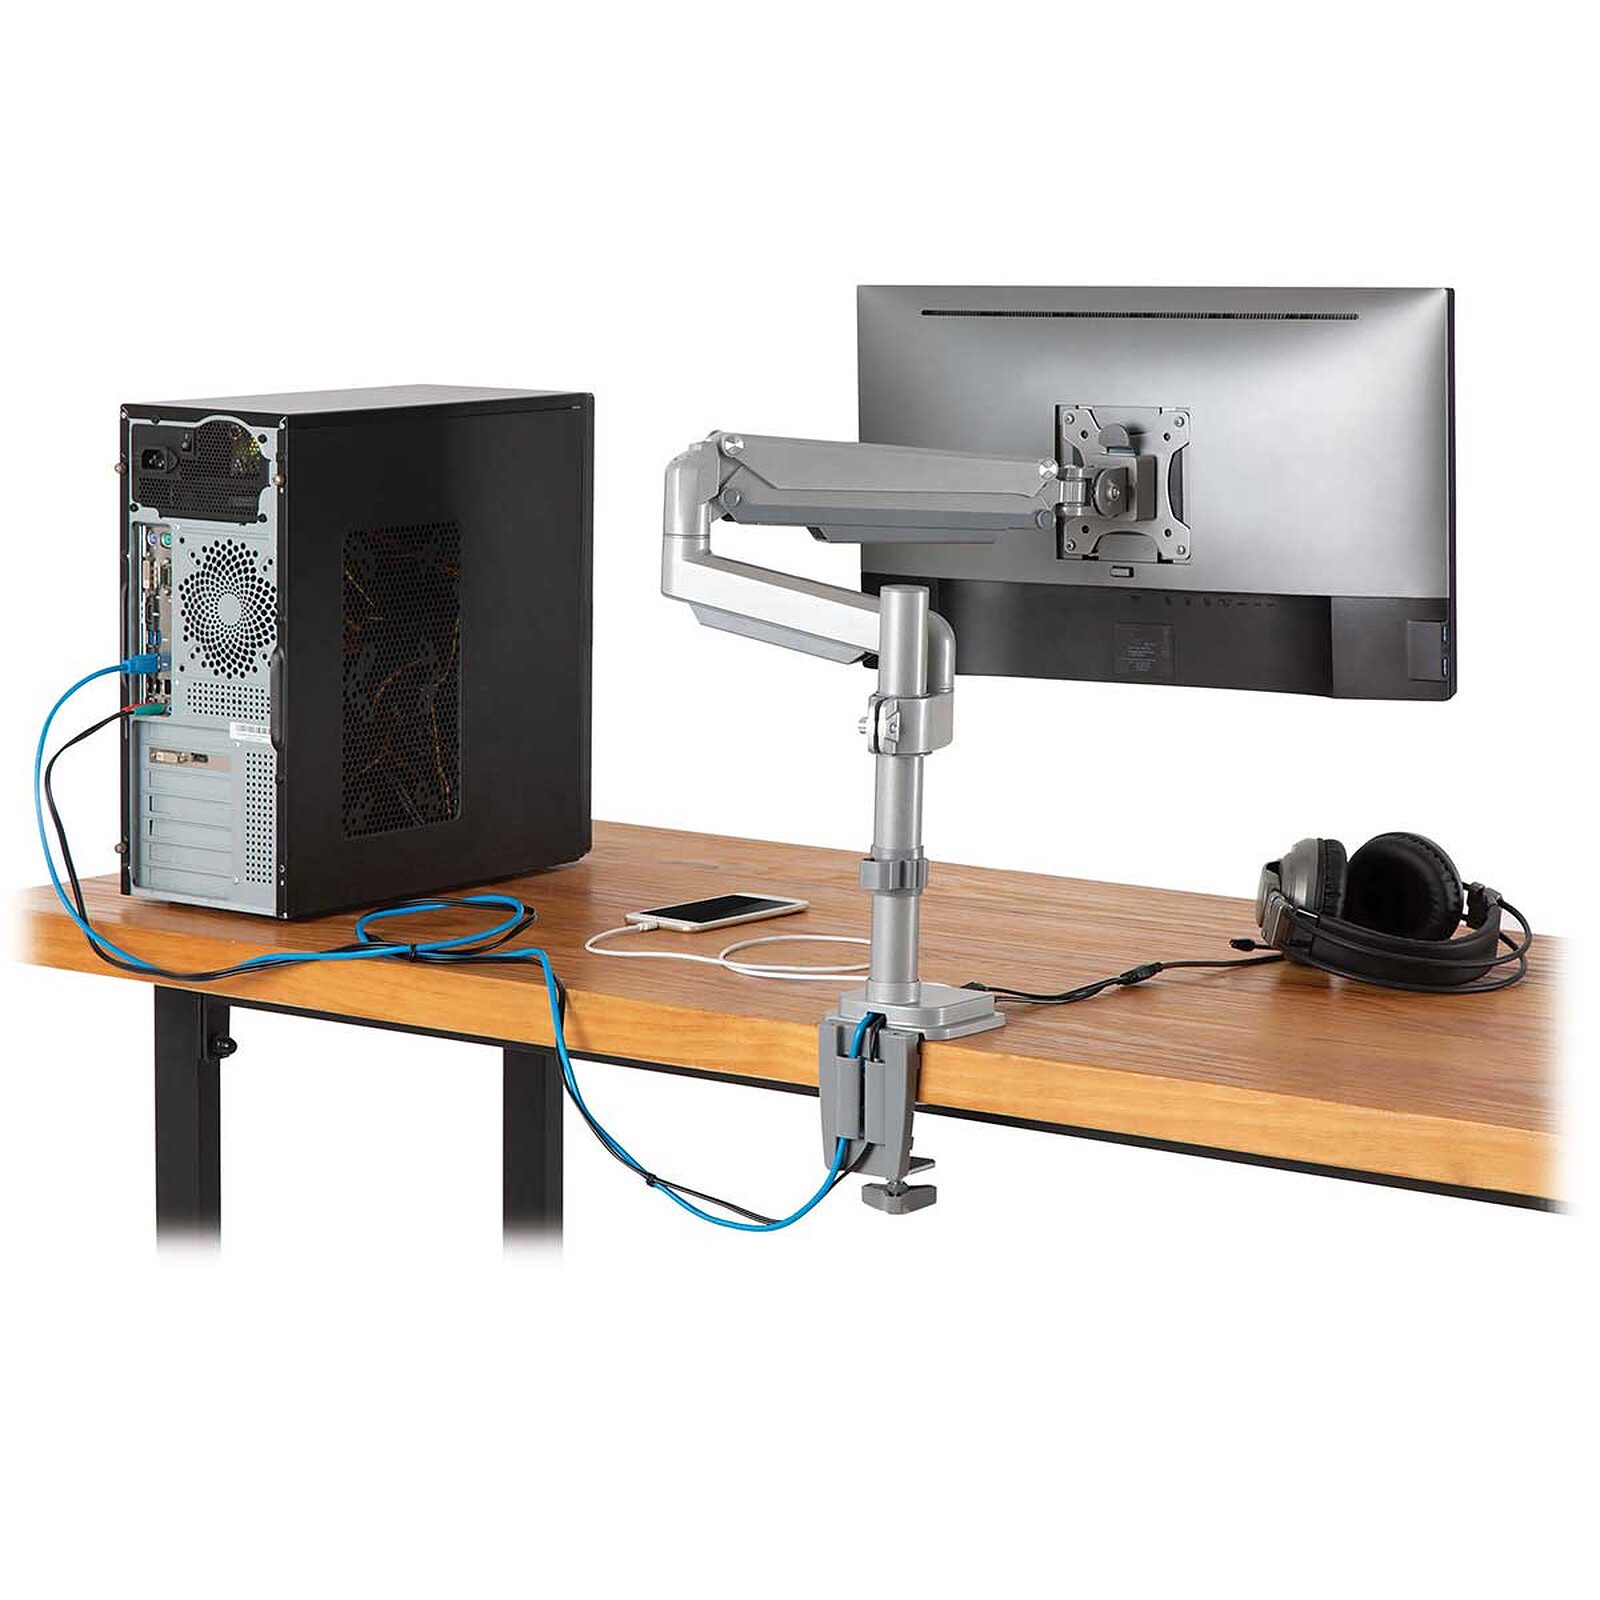 Platinum Series Brazo para Monitor Doble - Hasta 32 y 8kg - 2 Puertos USB  - Fellowes